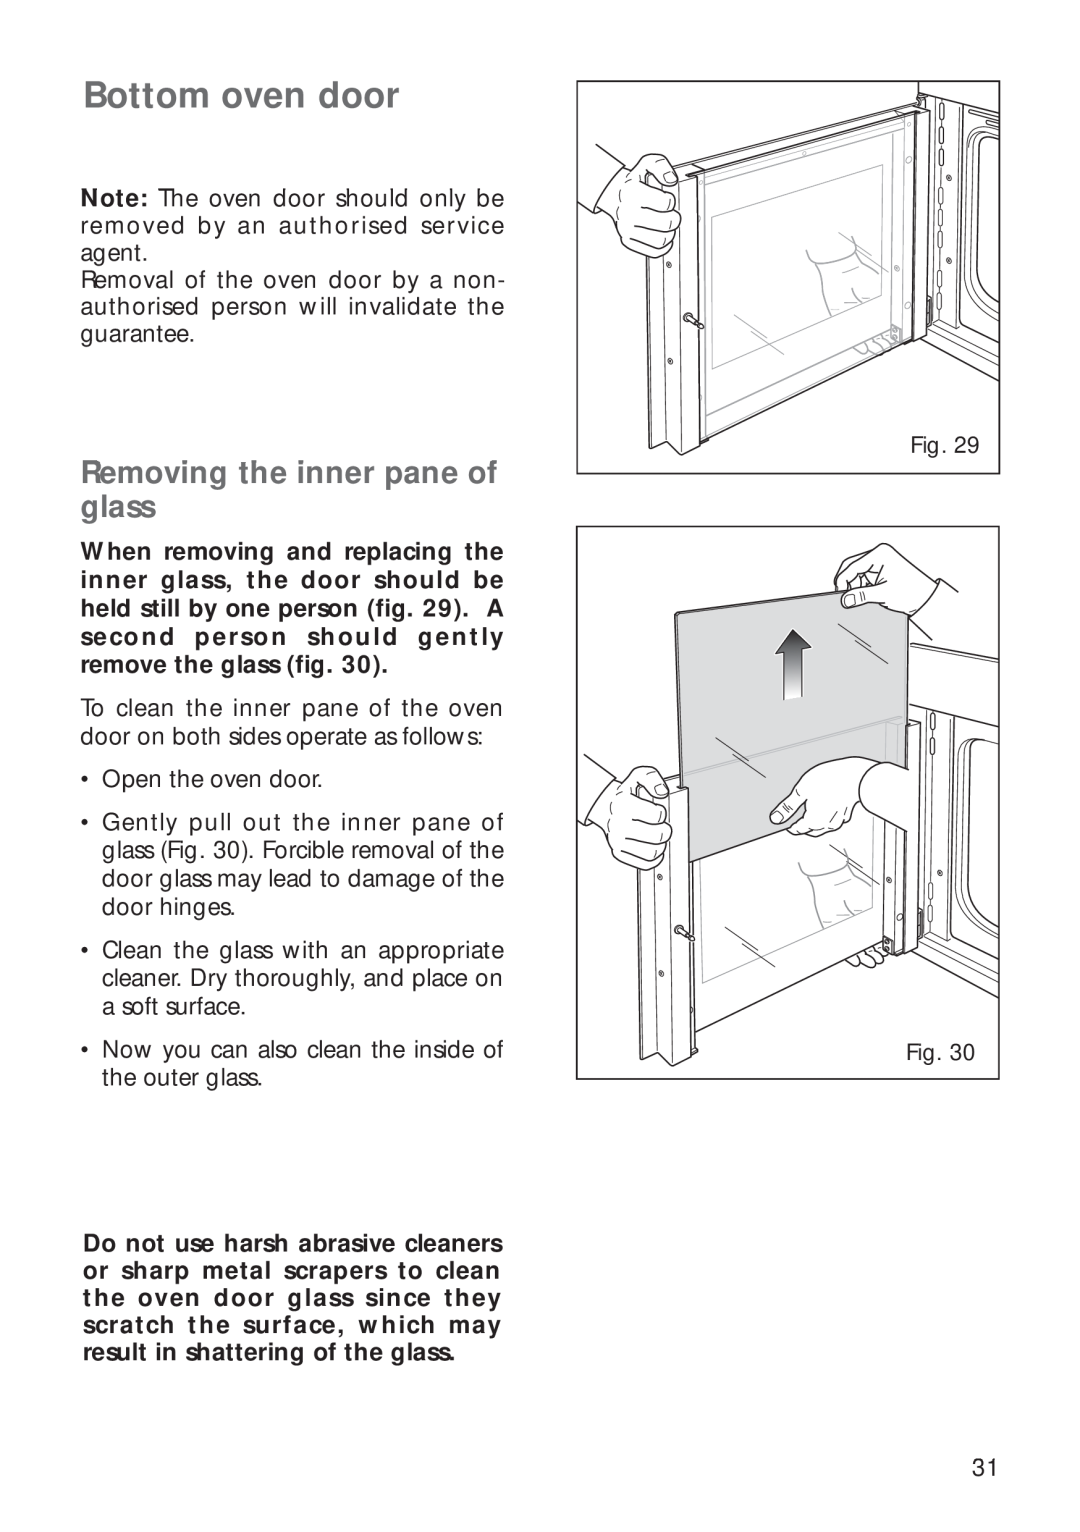 CDA RV 700 installation instructions Bottom oven door, Removing the inner pane of glass 